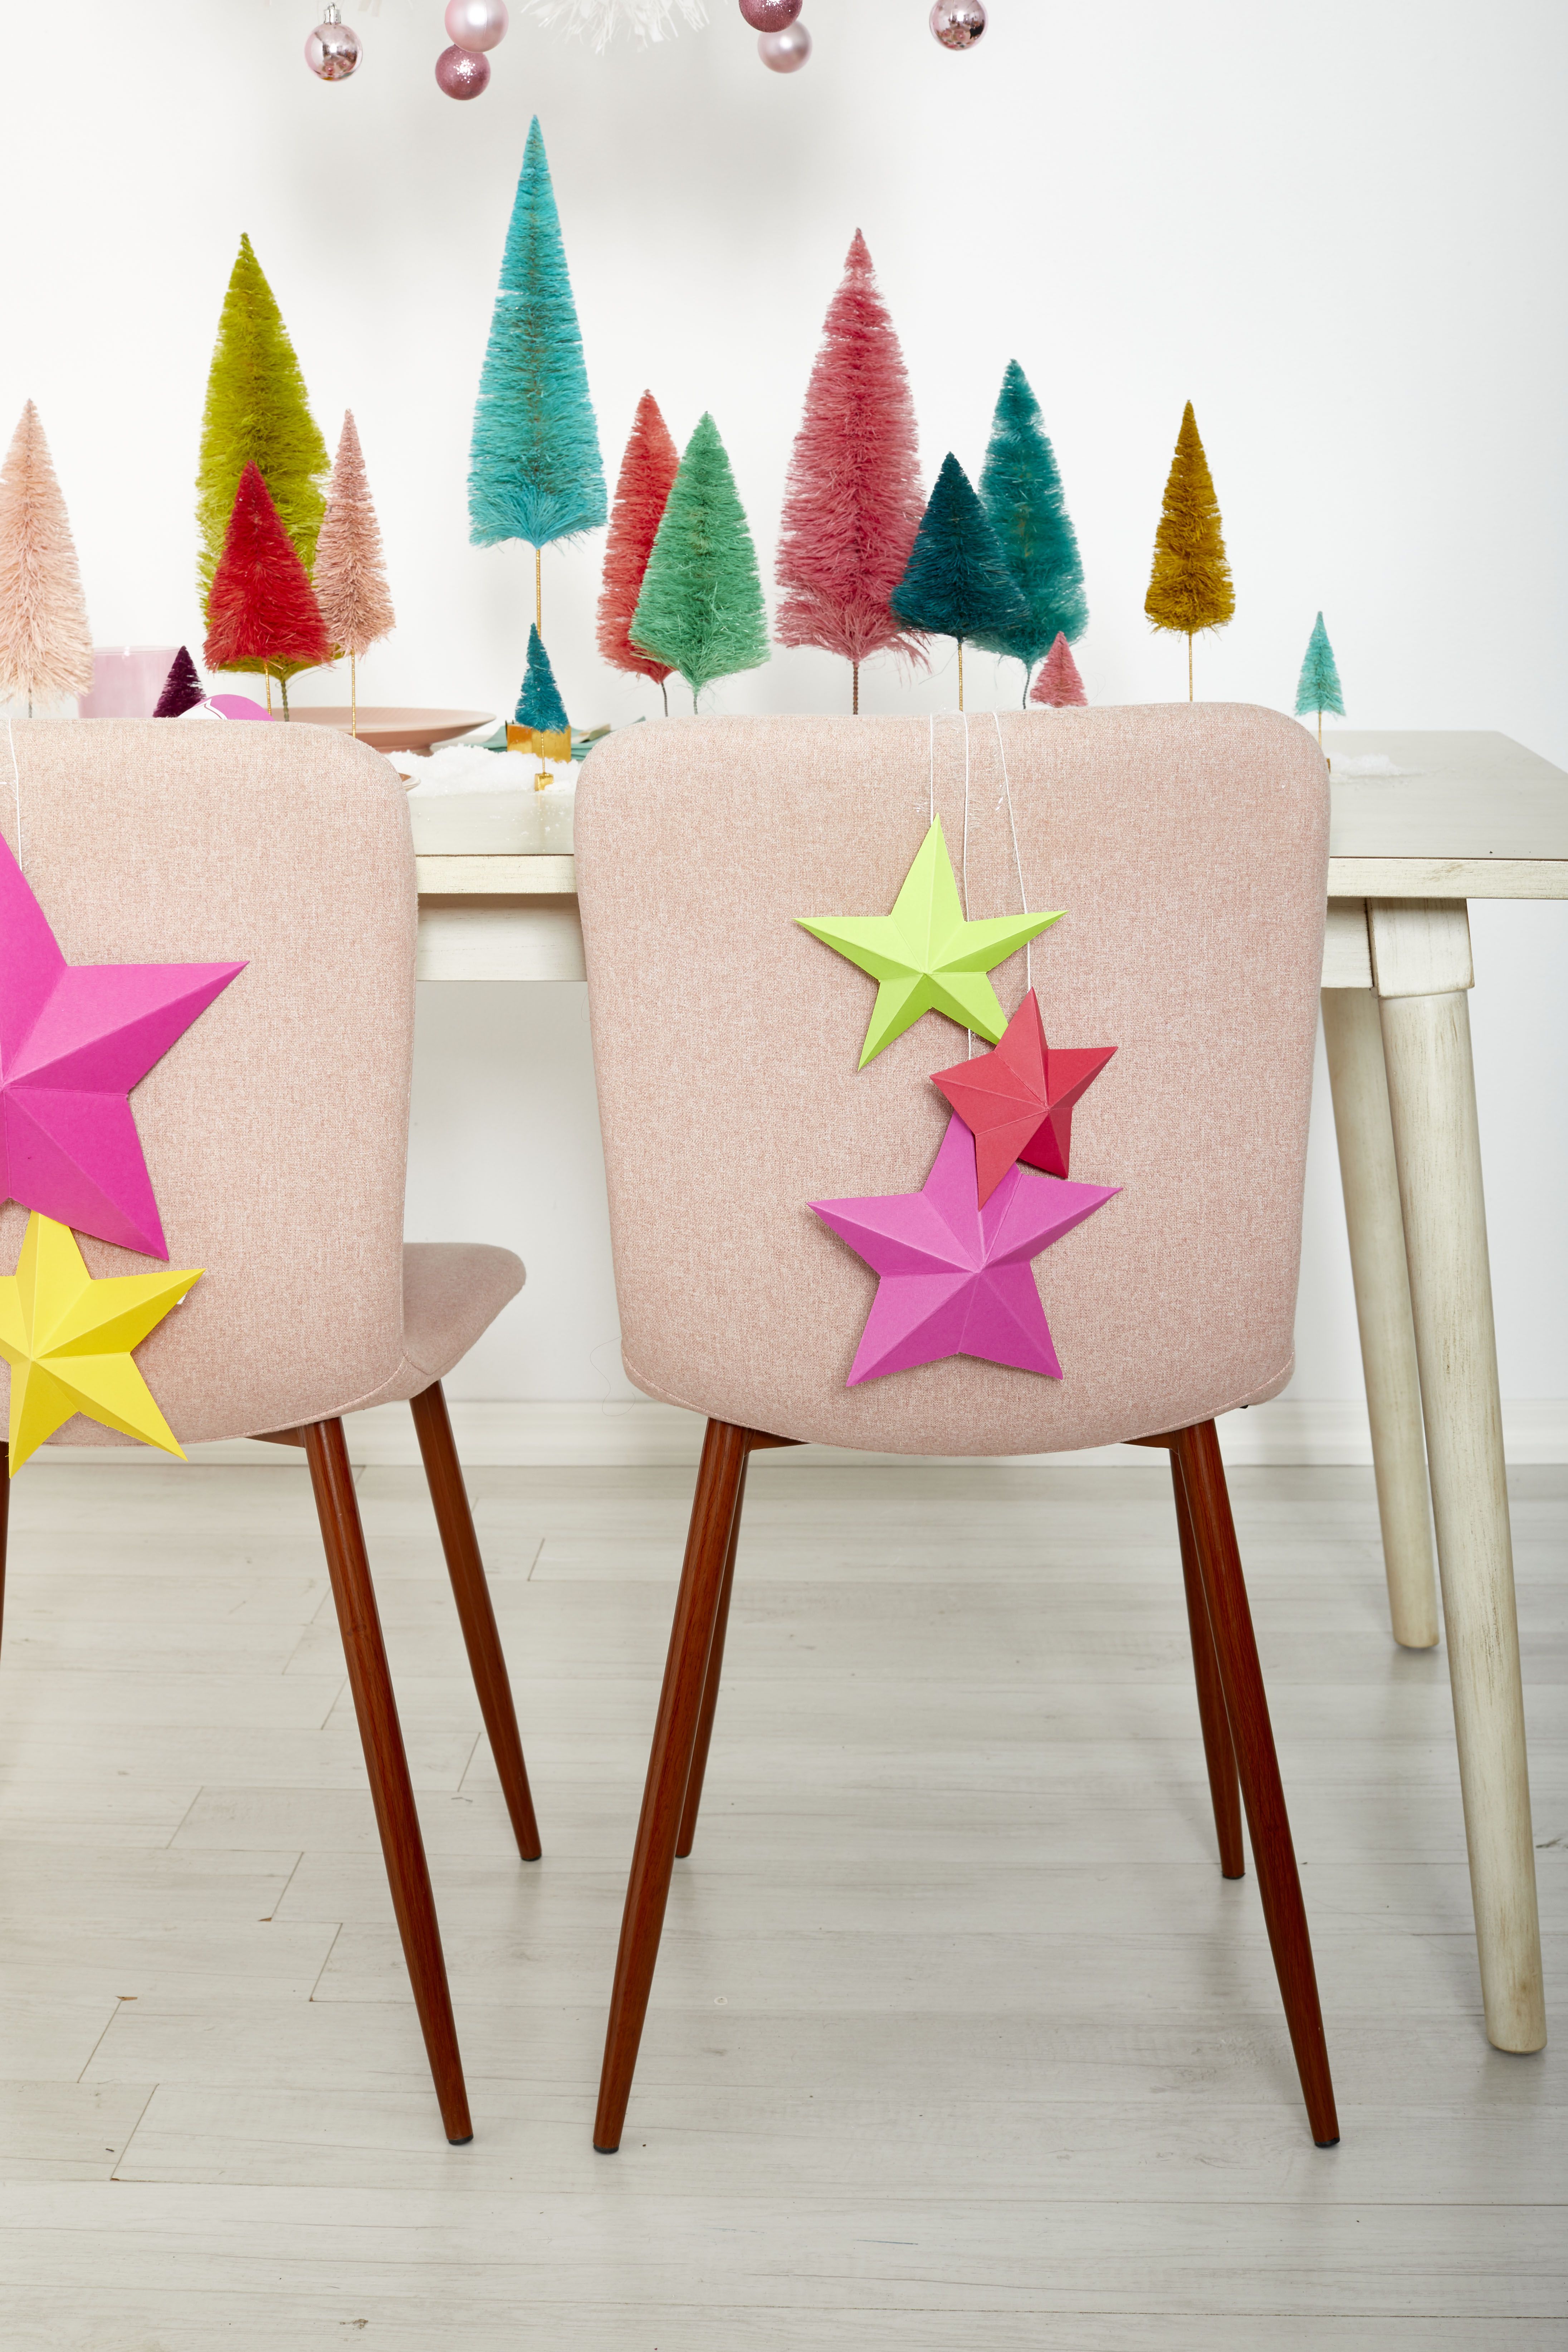 70 Easy Christmas Crafts 2020 Simple Diy Holiday Craft Ideas